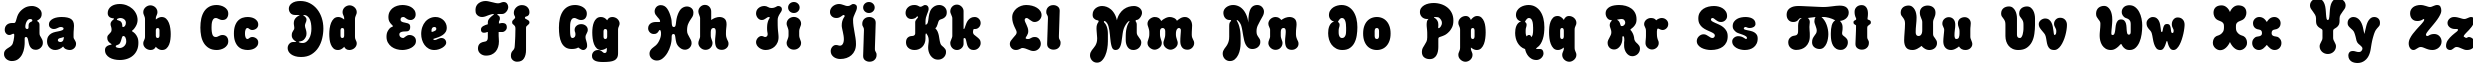 Пример написания английского алфавита шрифтом Malahit Bold